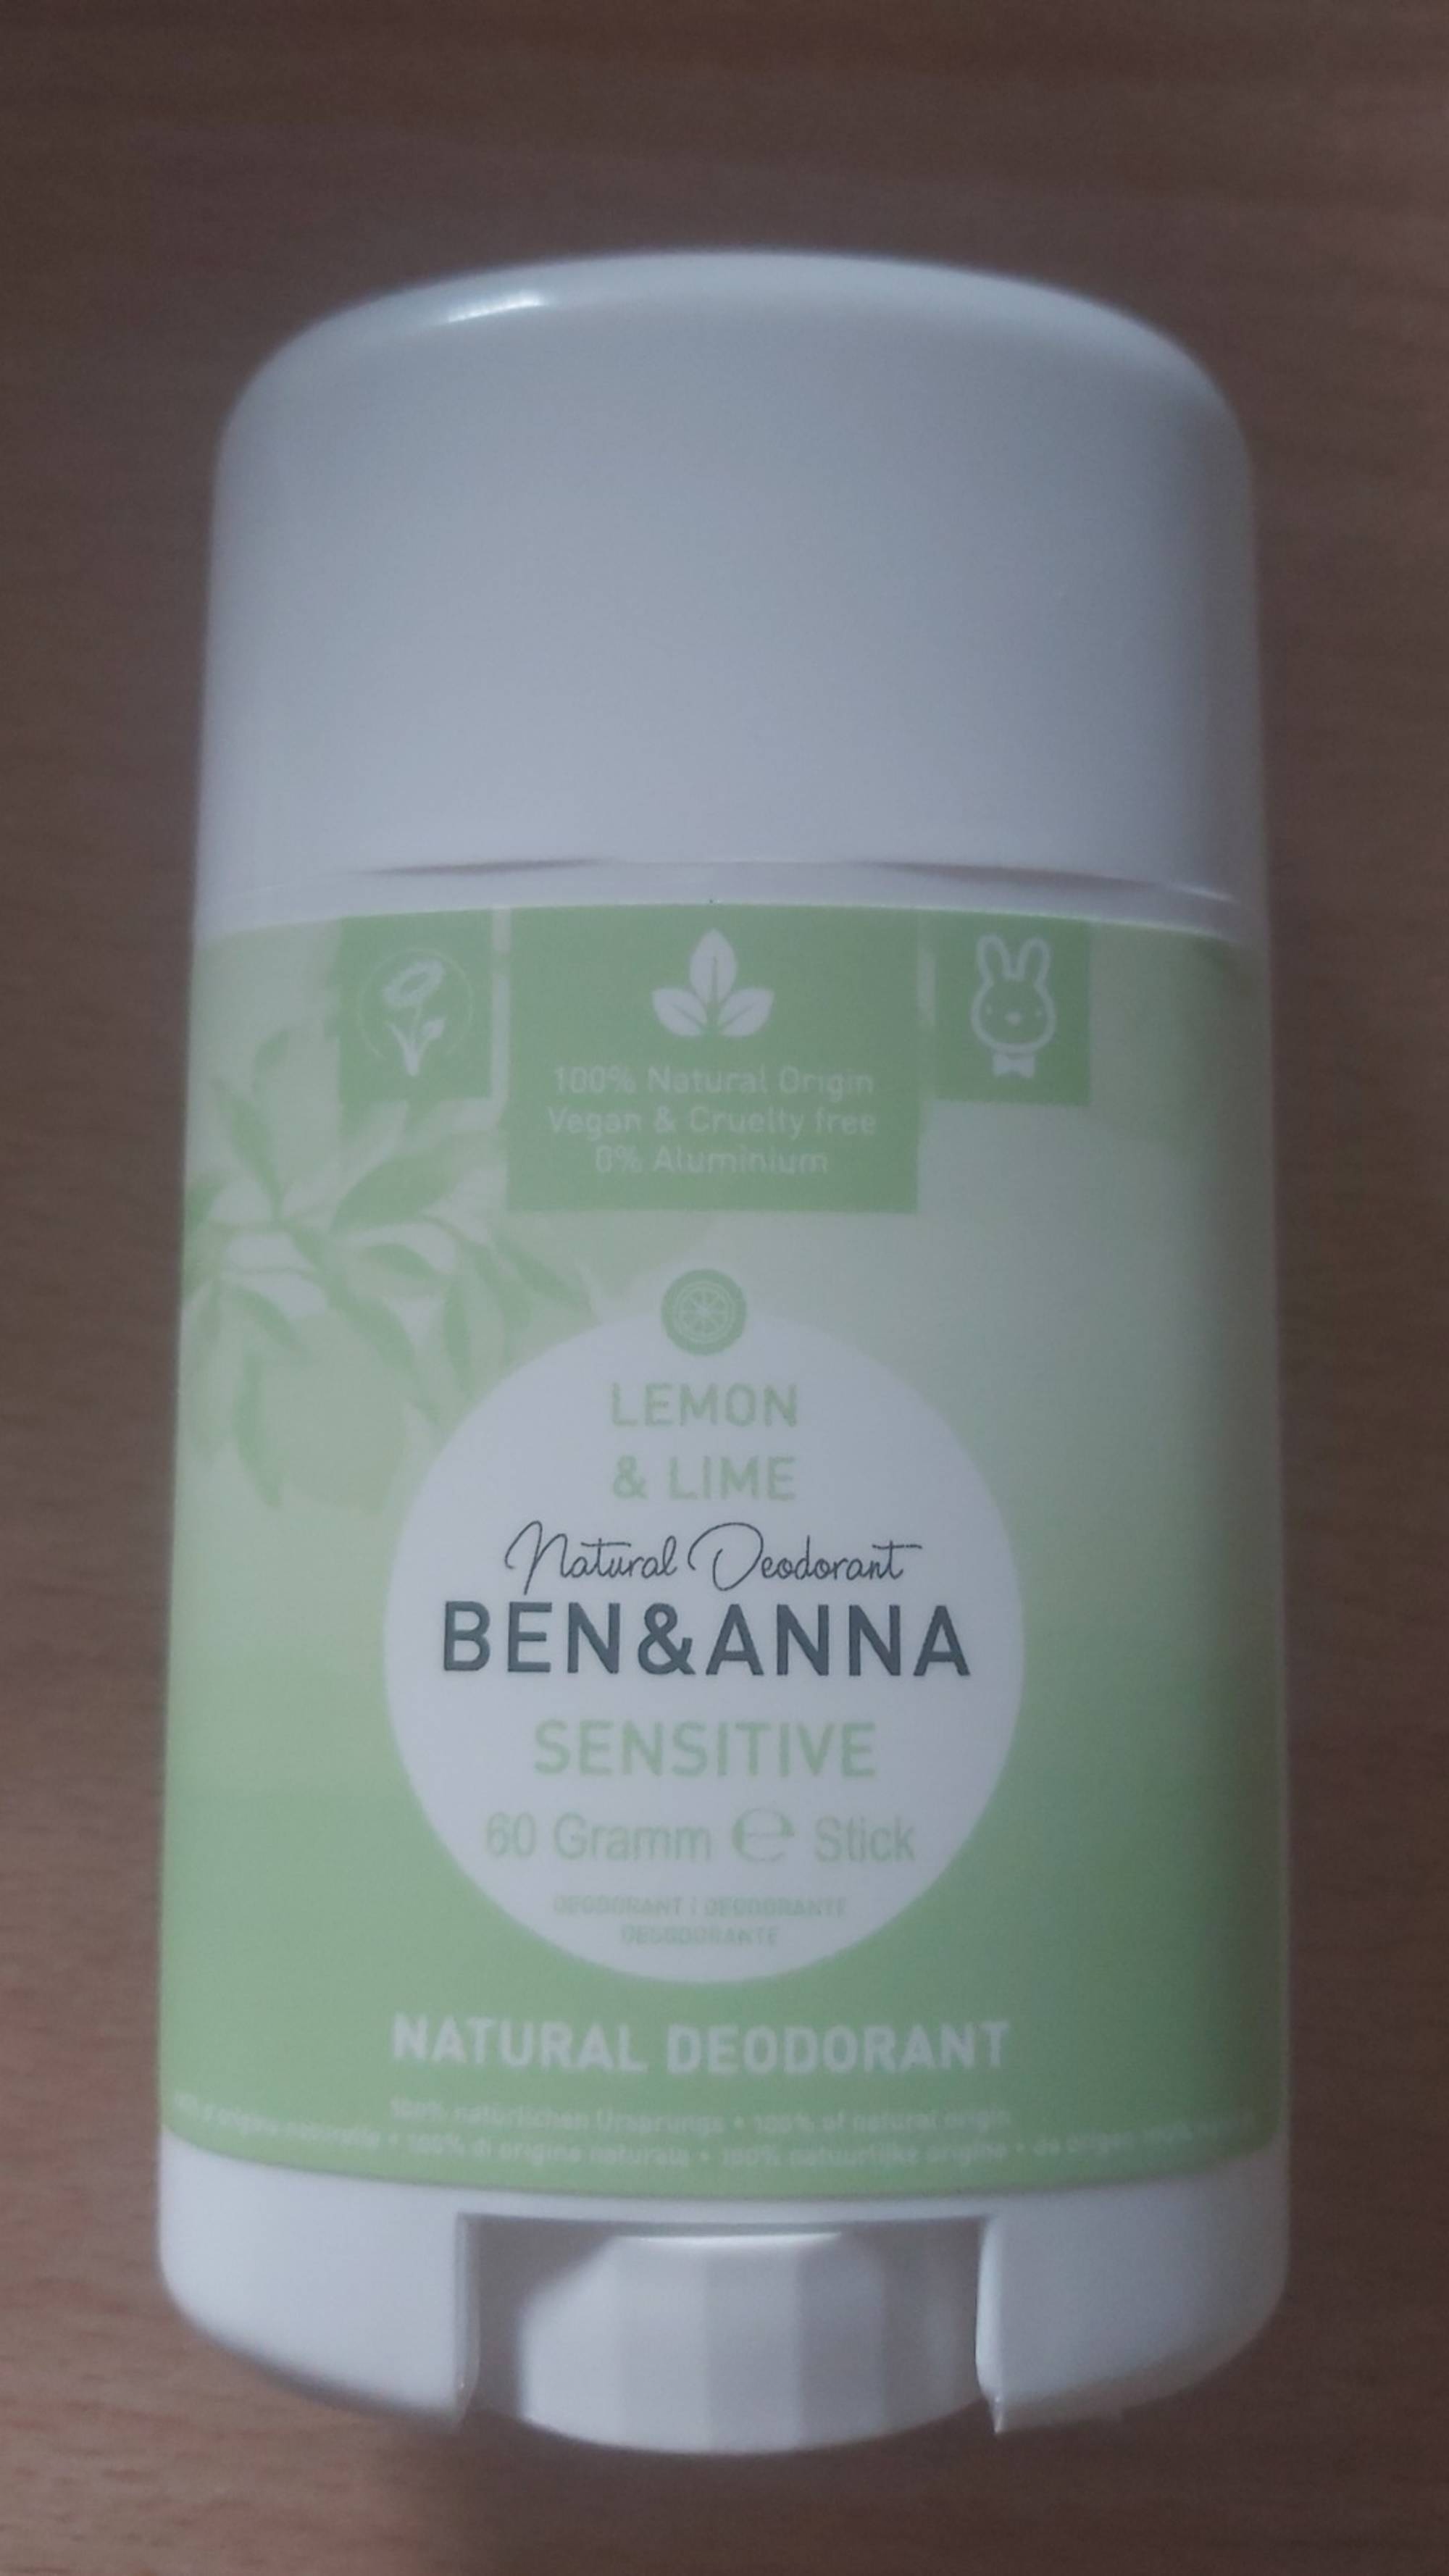 BEN & ANNA - Natural deodorant sensitive lemon & lime